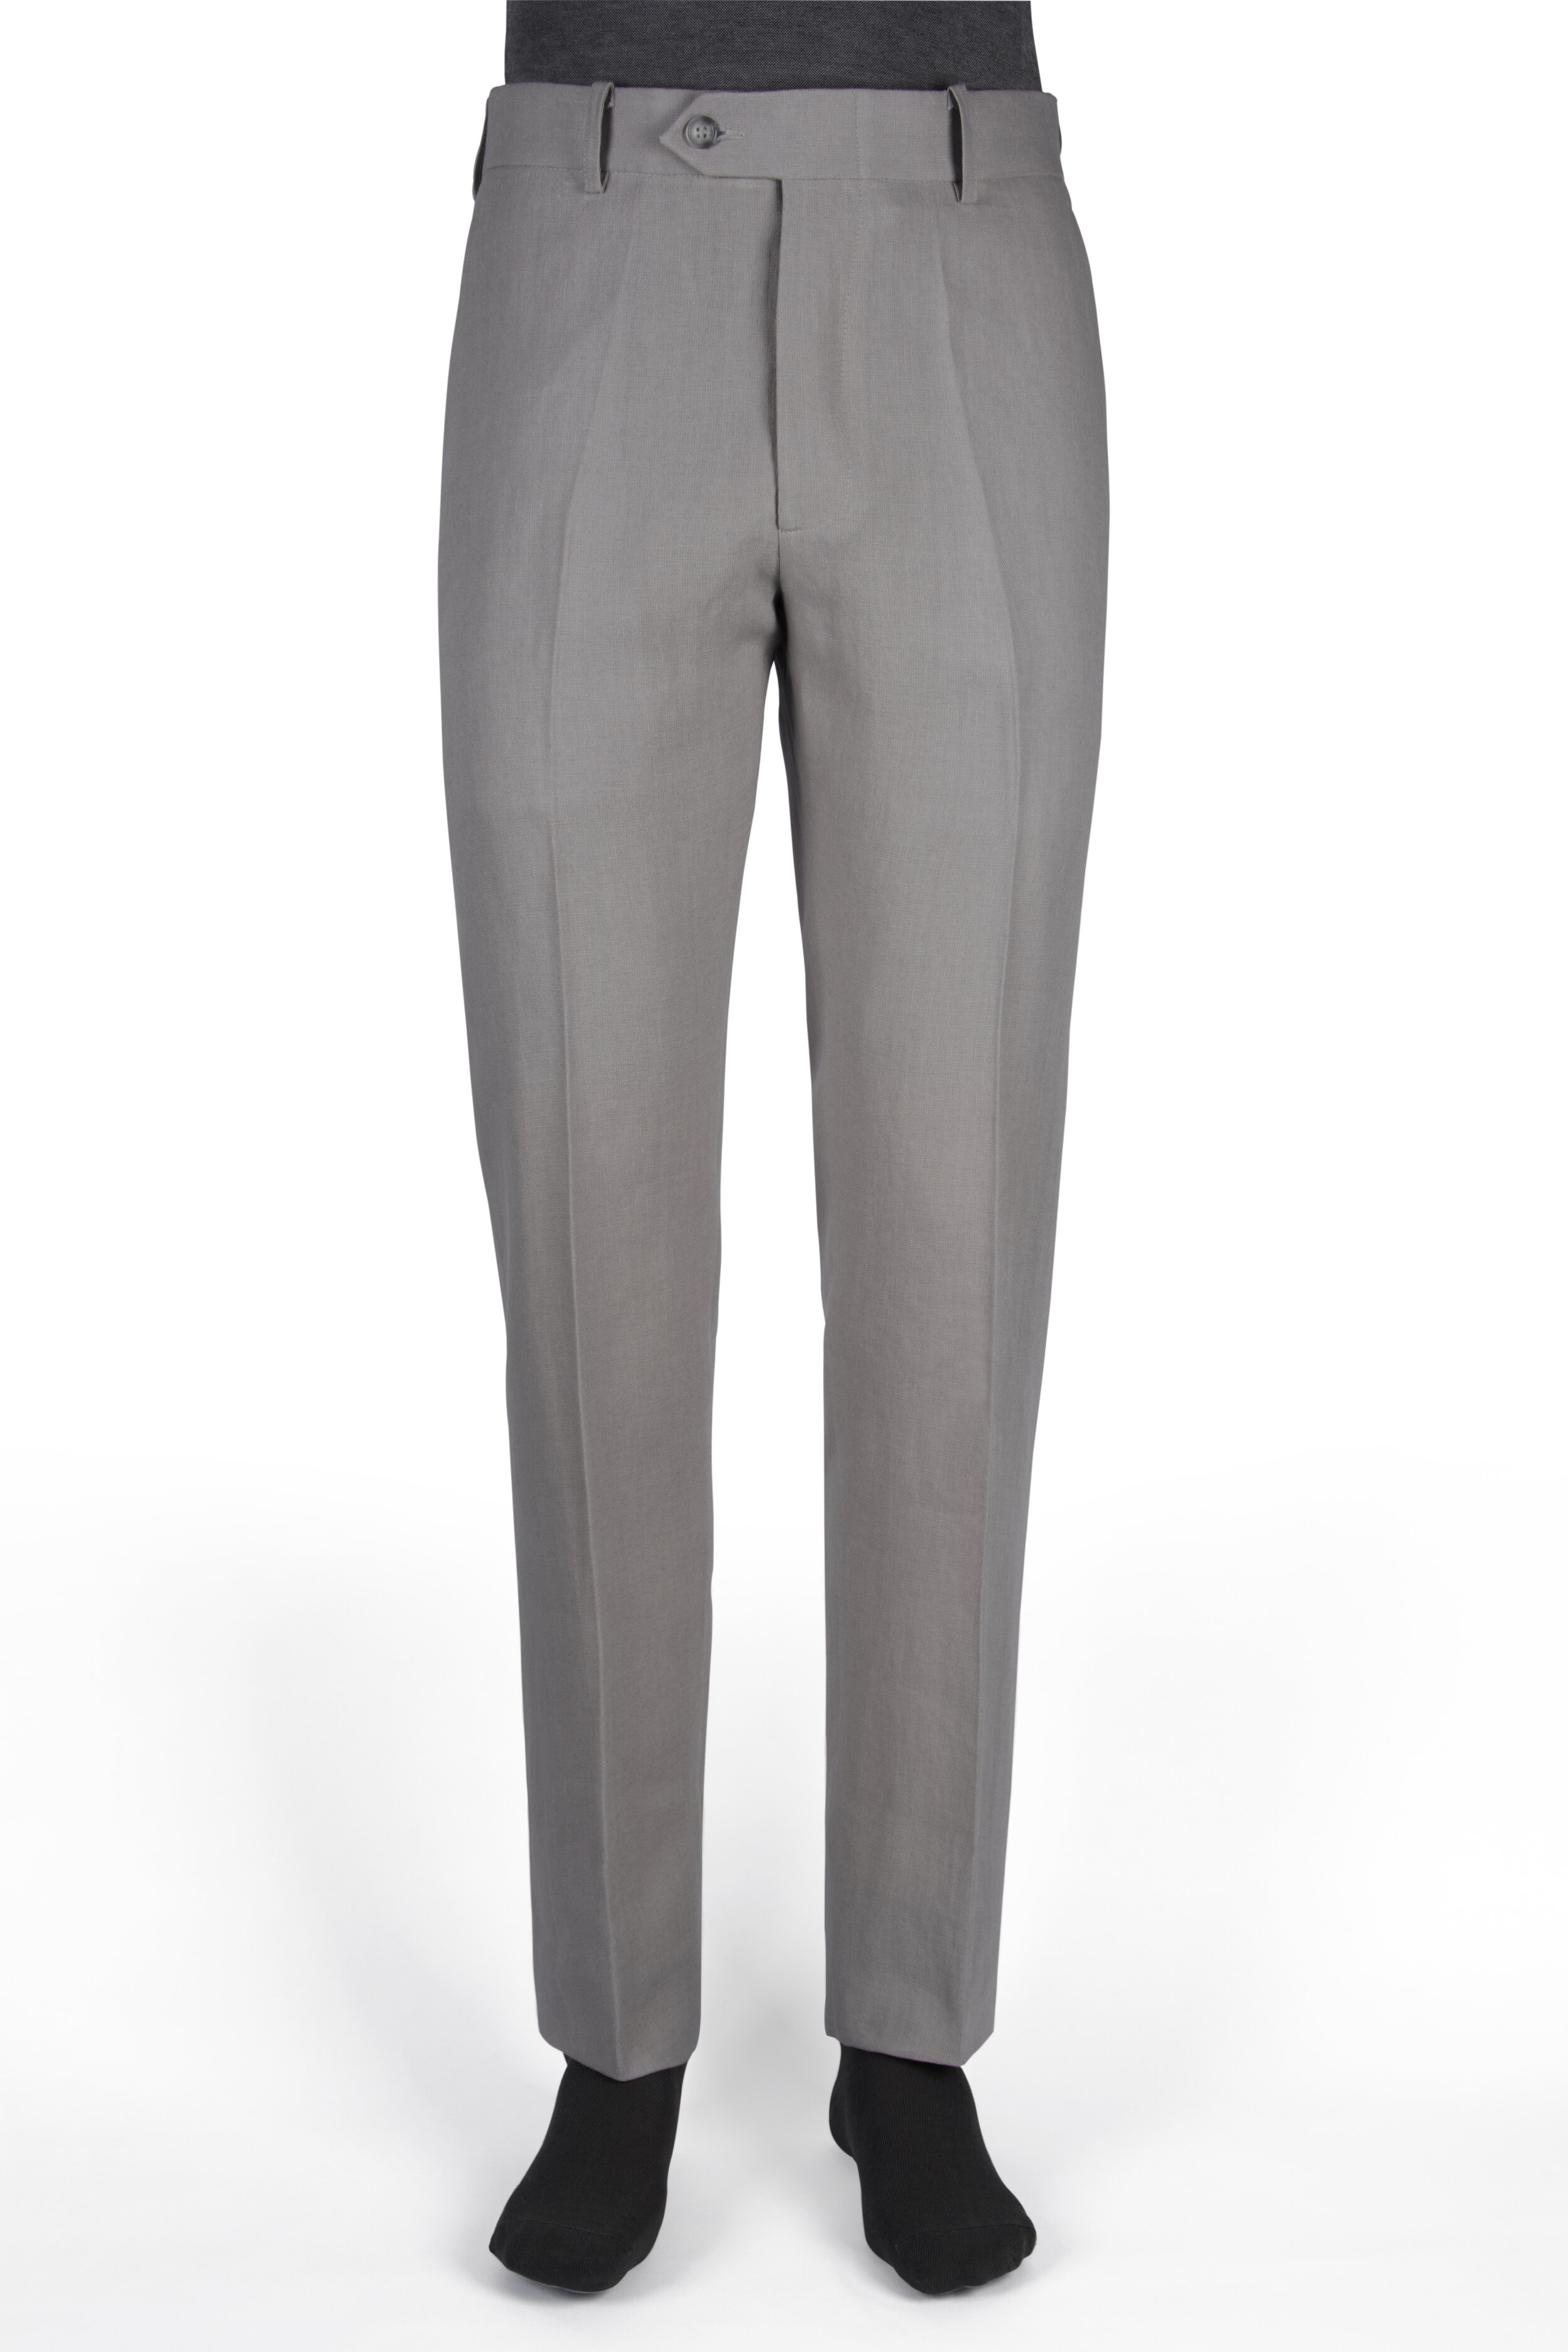 Pantalon de vestir slim fit color gris plata — Casa del Lino